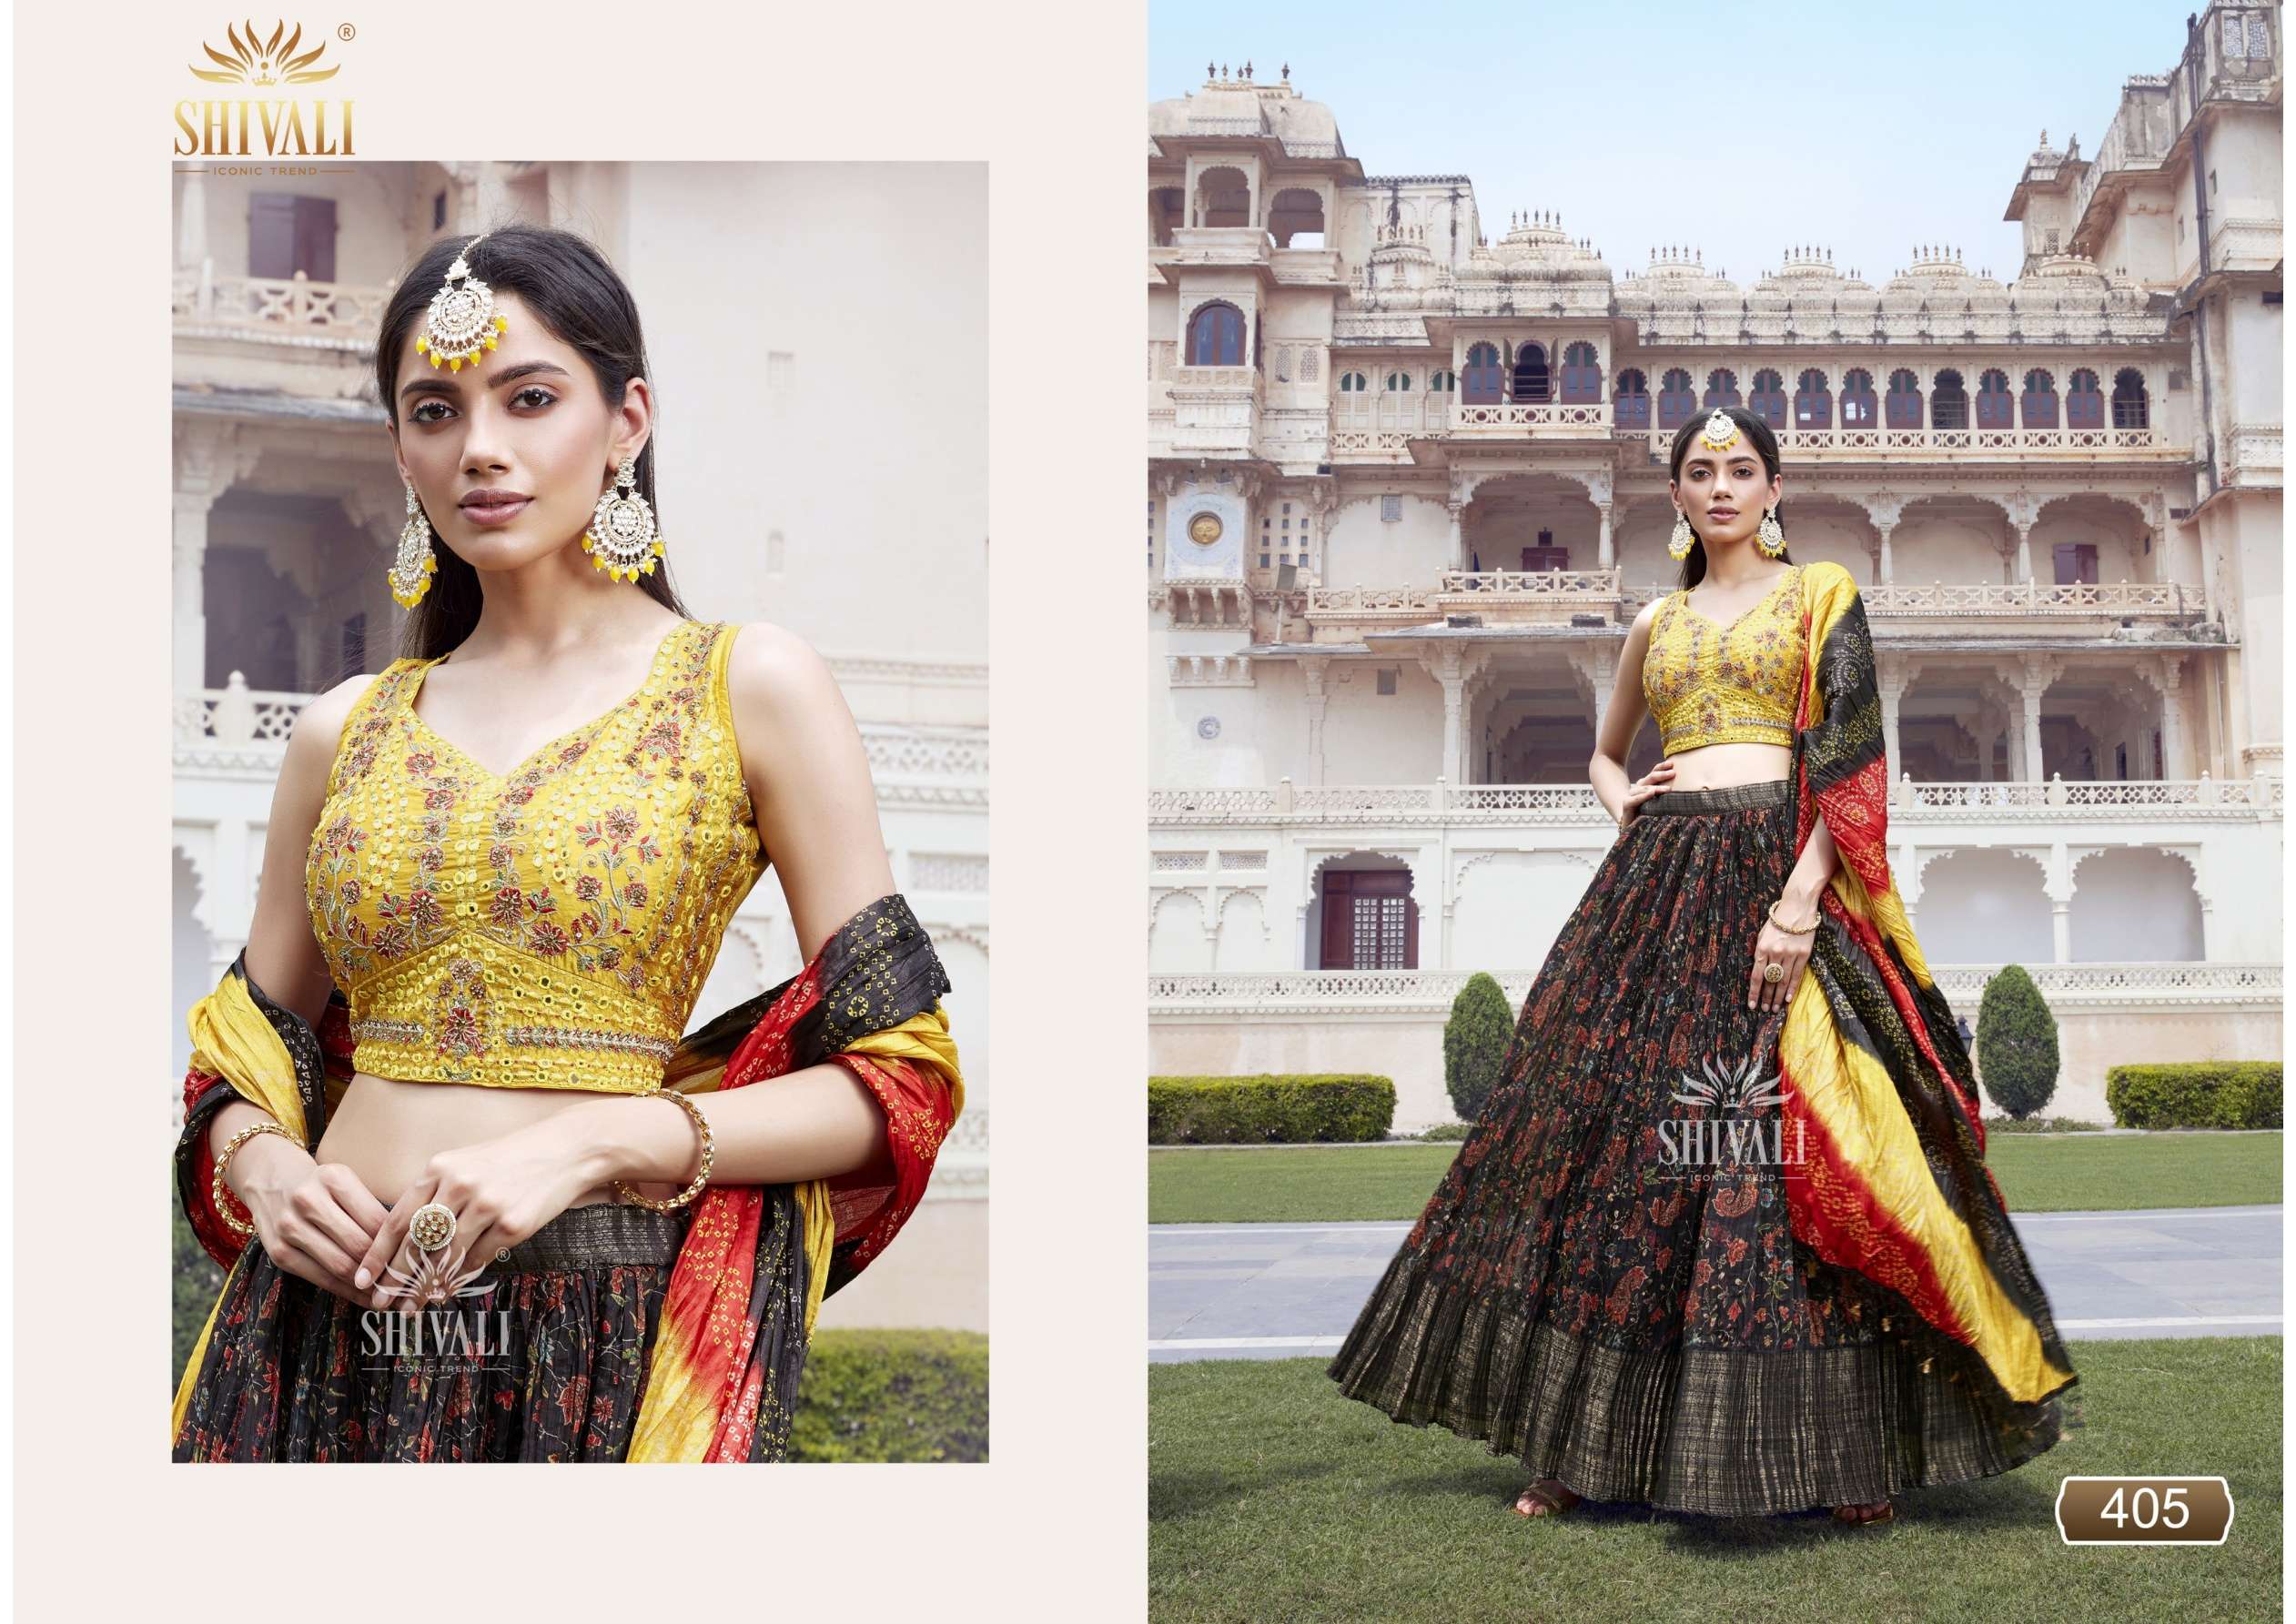 shivali s4 u riwaaz vol-4 401-405 series designer festive wear lehenga collection best price surat wholesaler 